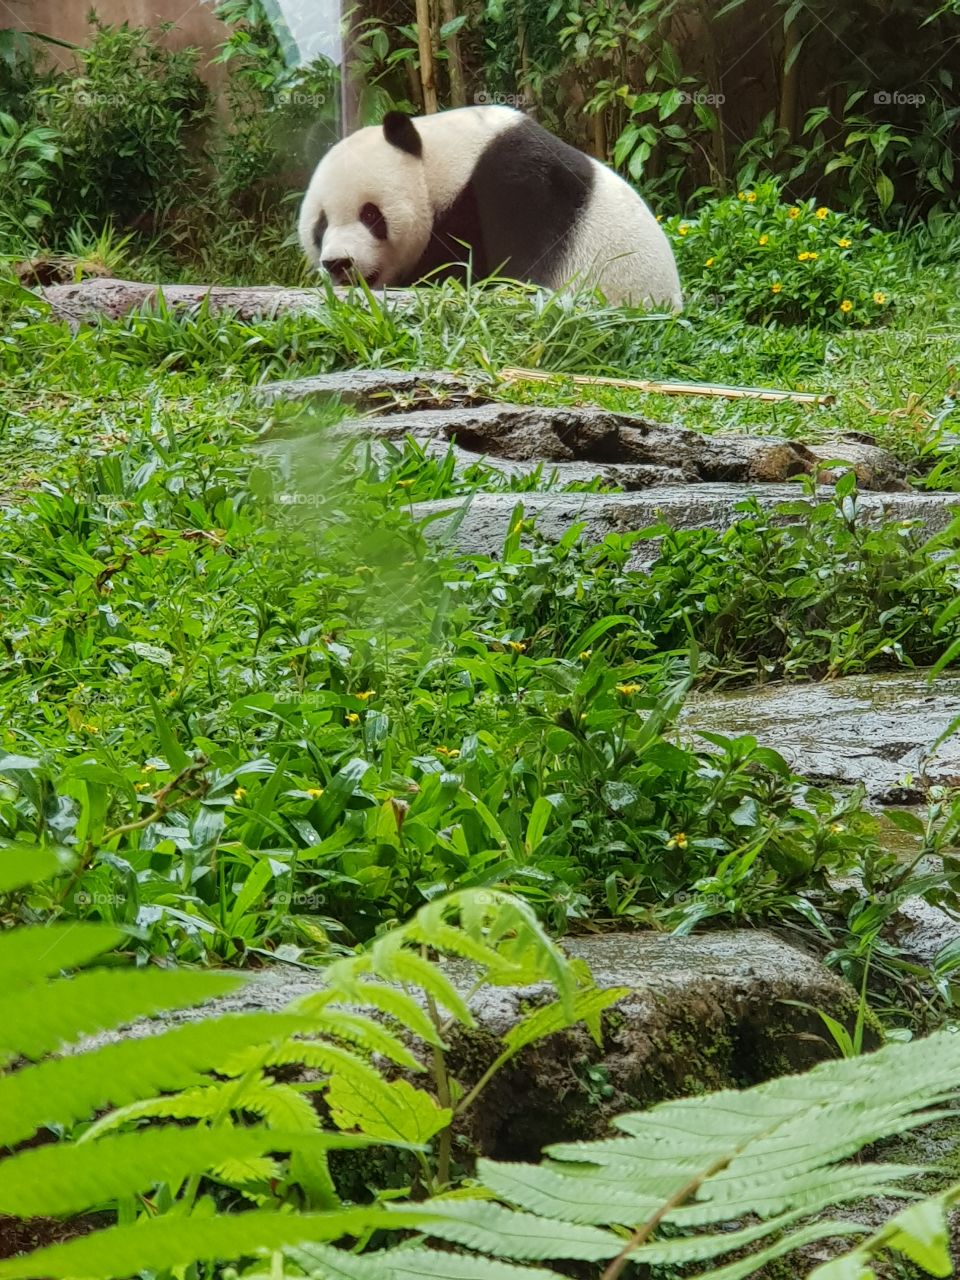 Giant Panda from China